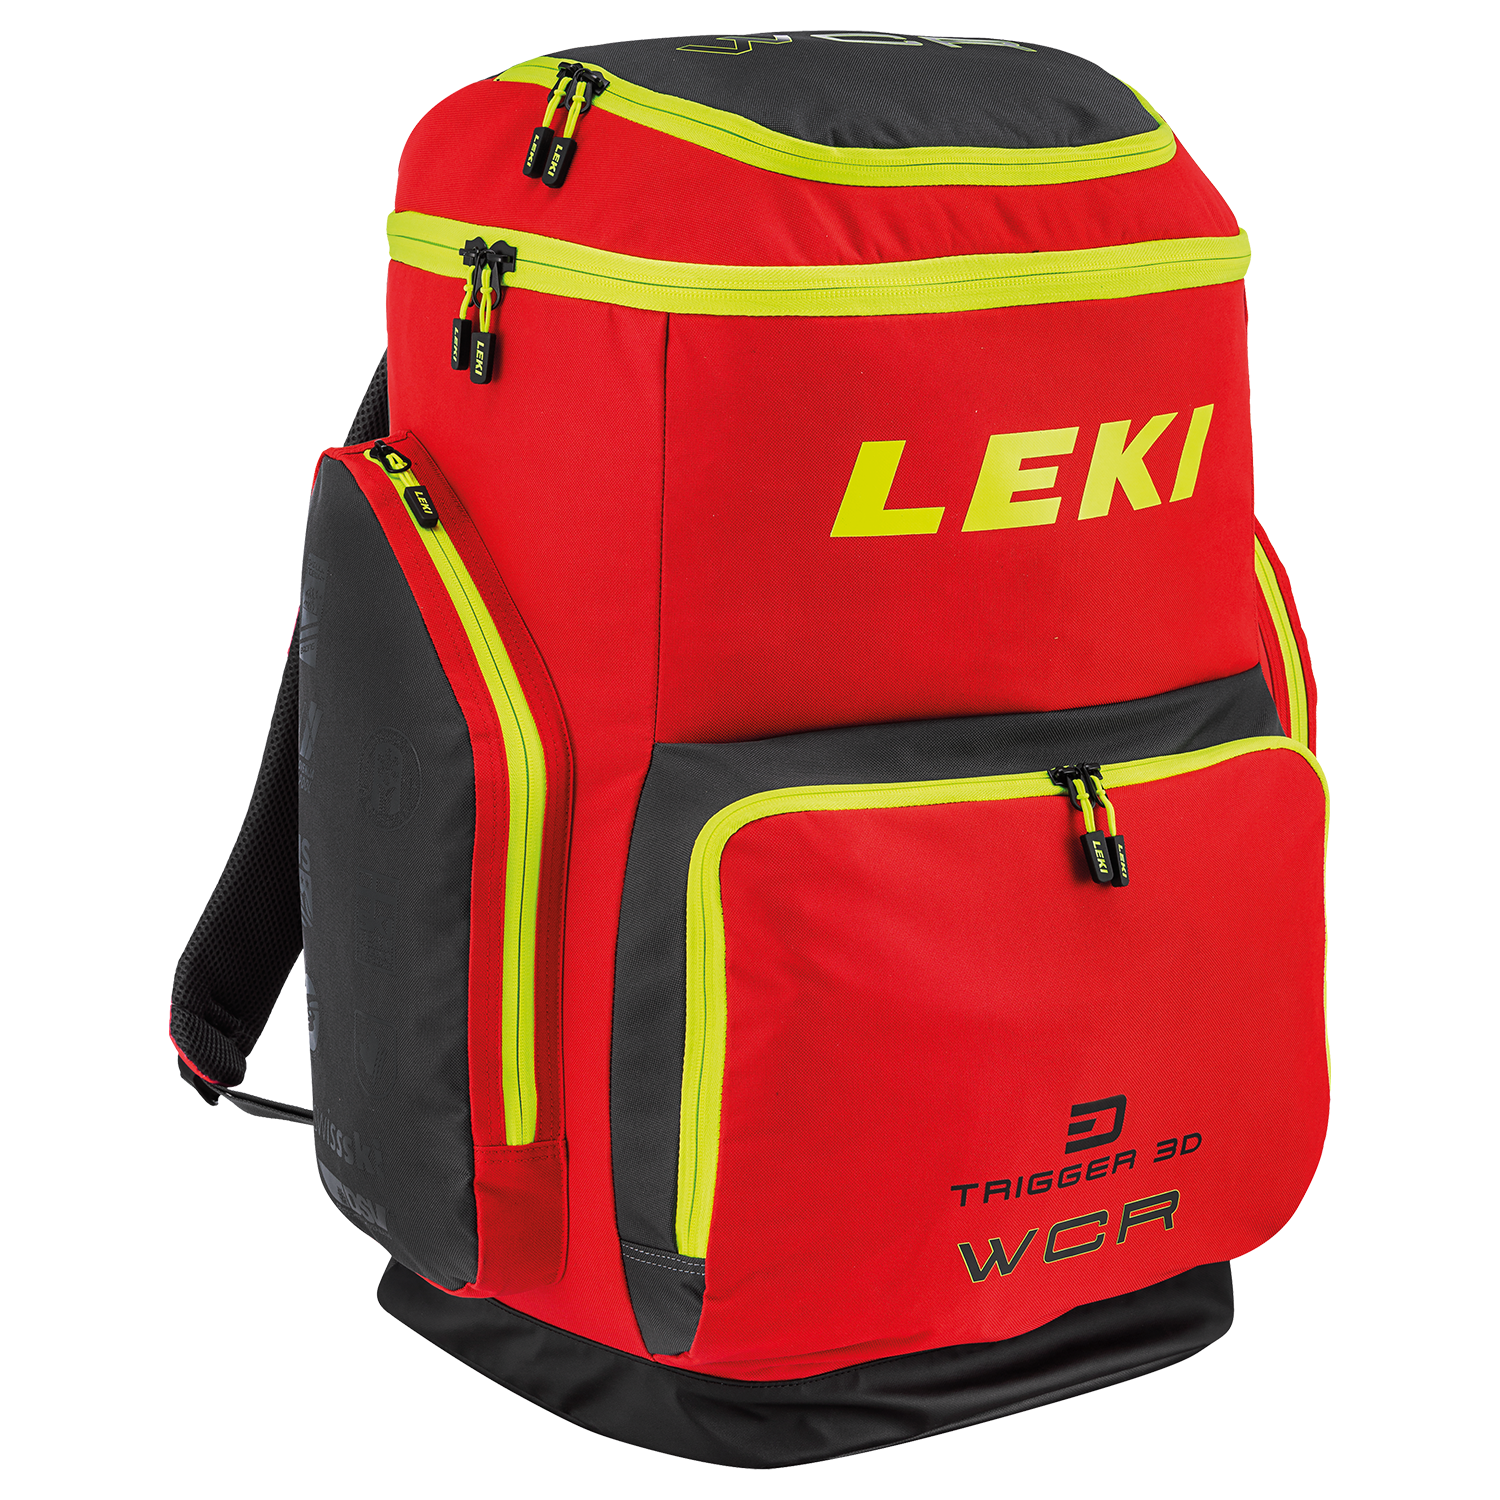 Leki Ski Boot Bag WCR 85L - Sacca portascarponi